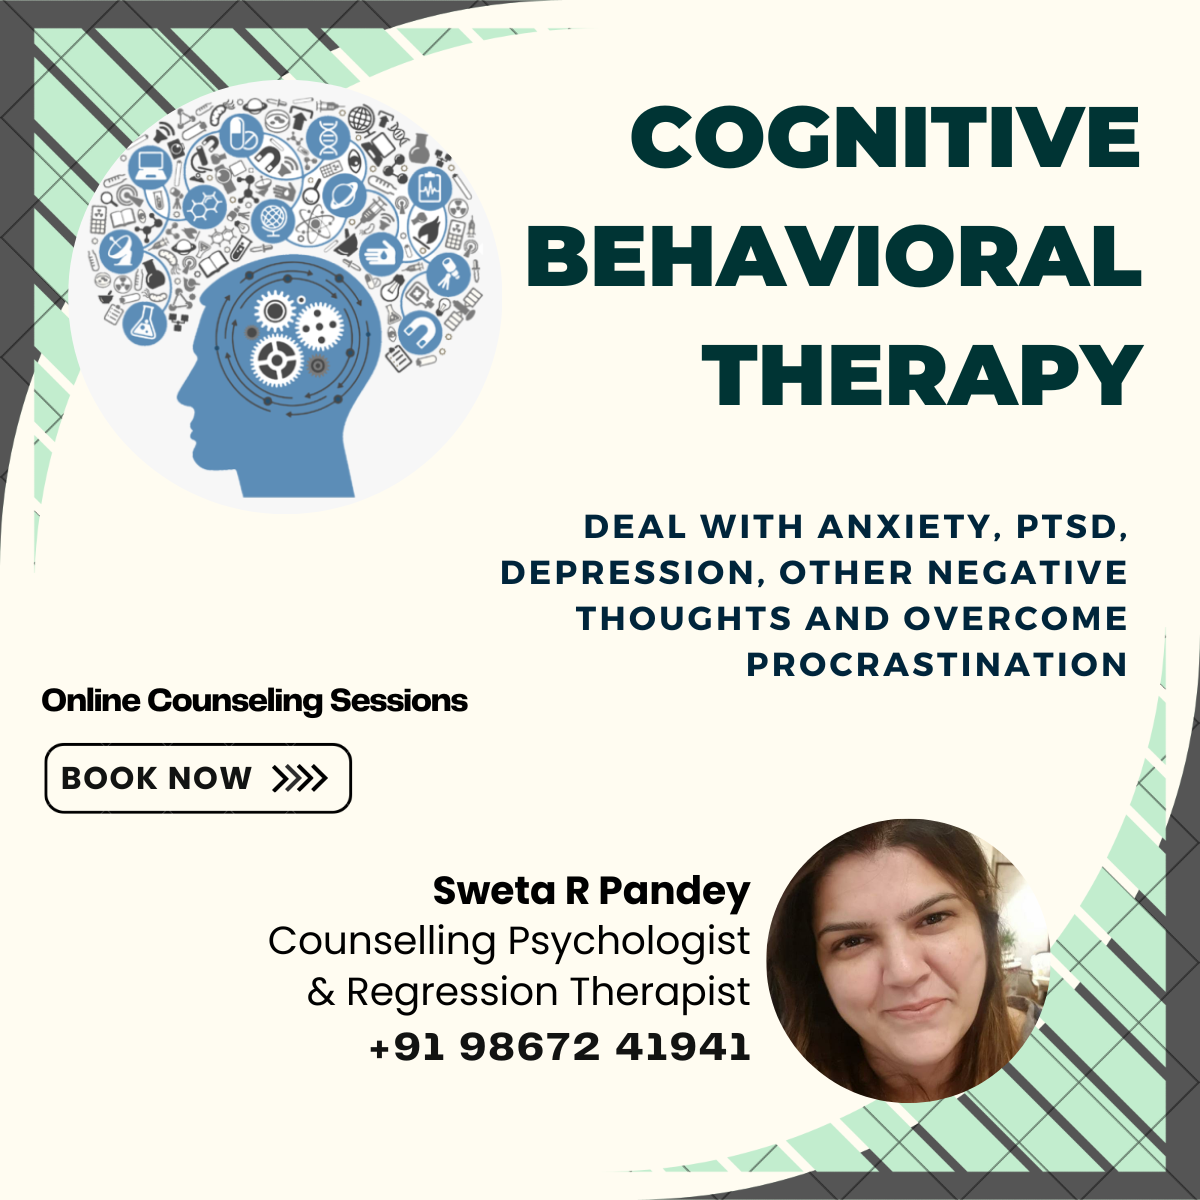 Sweta R Pandey - Cognitive Behavioral Therapy - Thiruvananthapuram